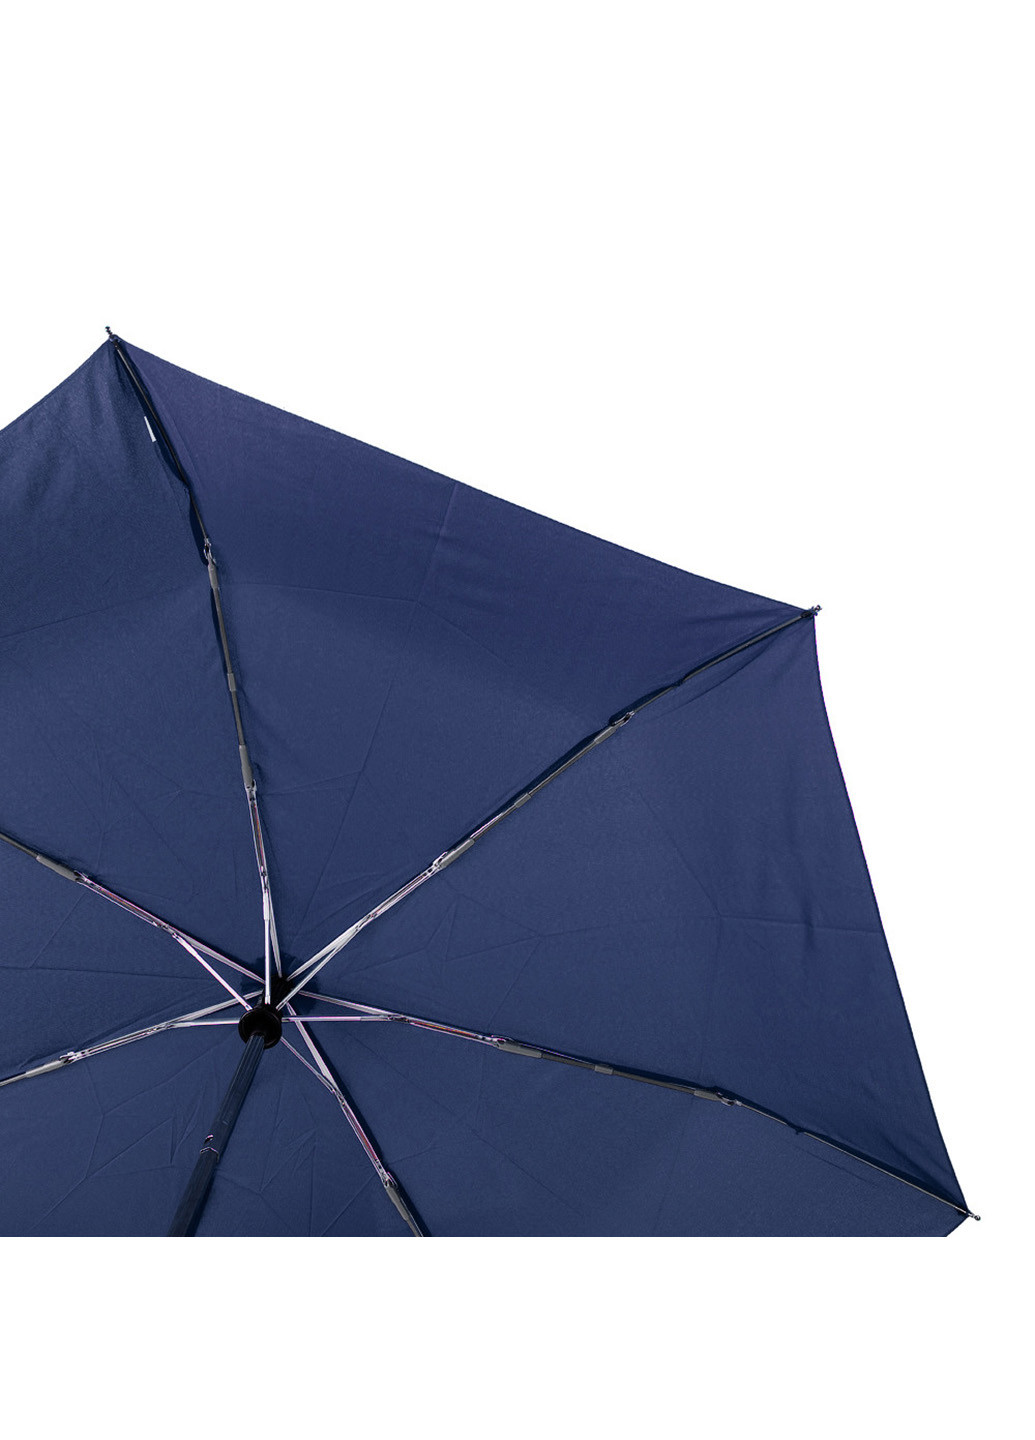 Жіночий складаний парасолька повний автомат 96 см Happy Rain (216146417)